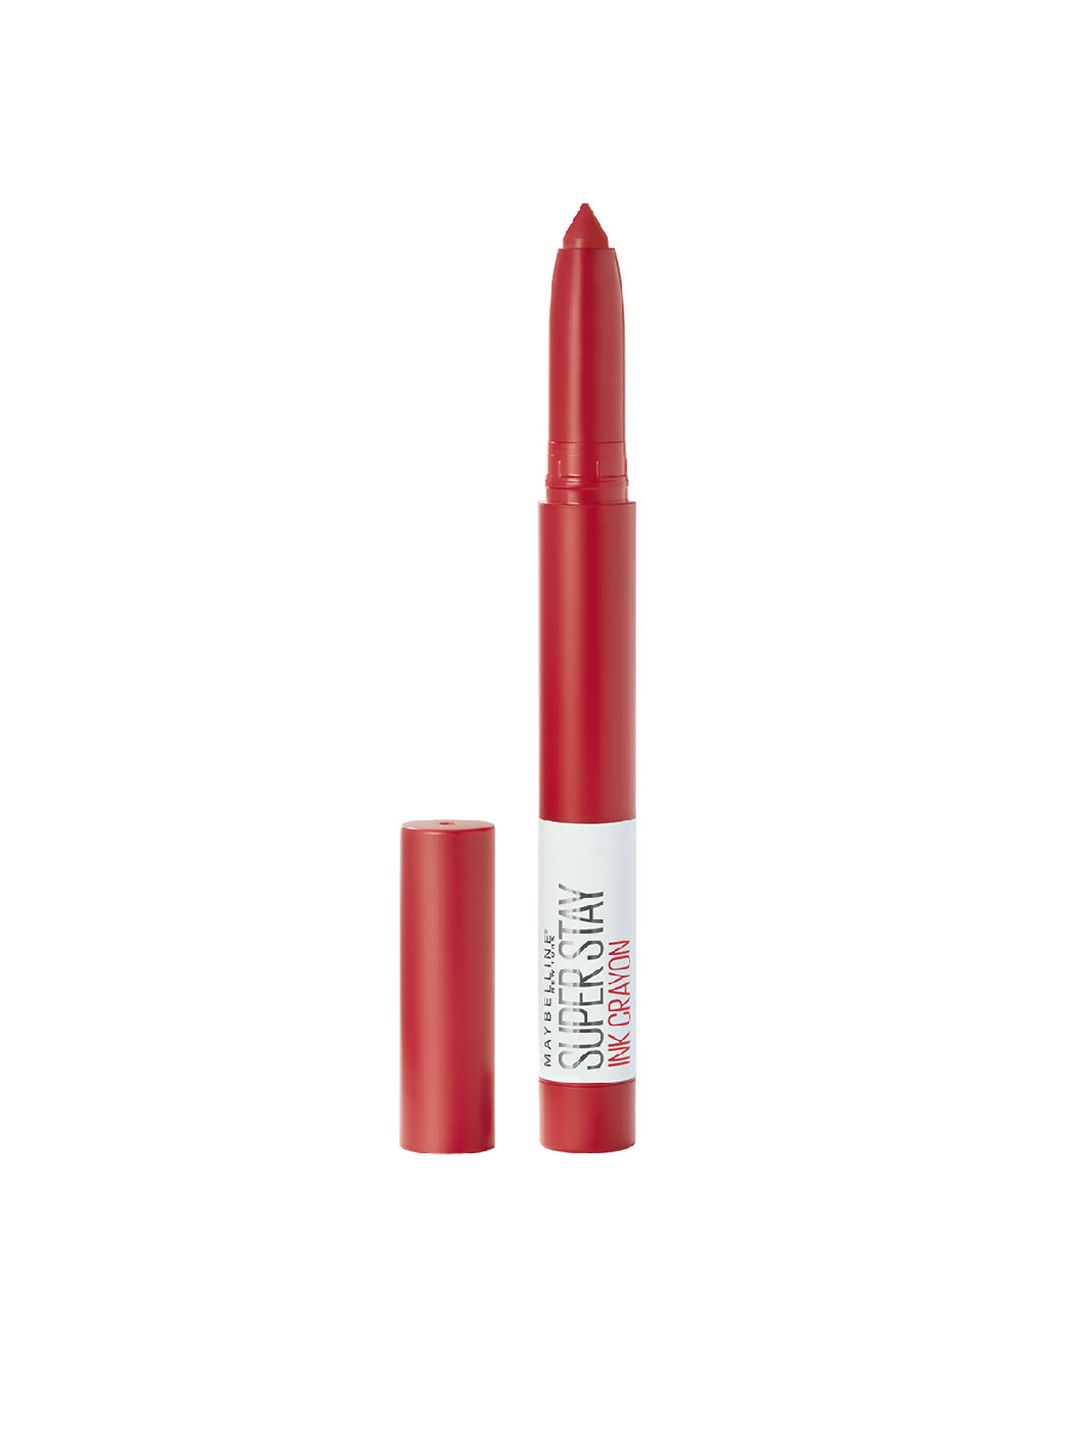 Maybelline New York Superstay Matte Ink Crayon Lipstick - Hustle In Heels 45 1.2 g Price in India